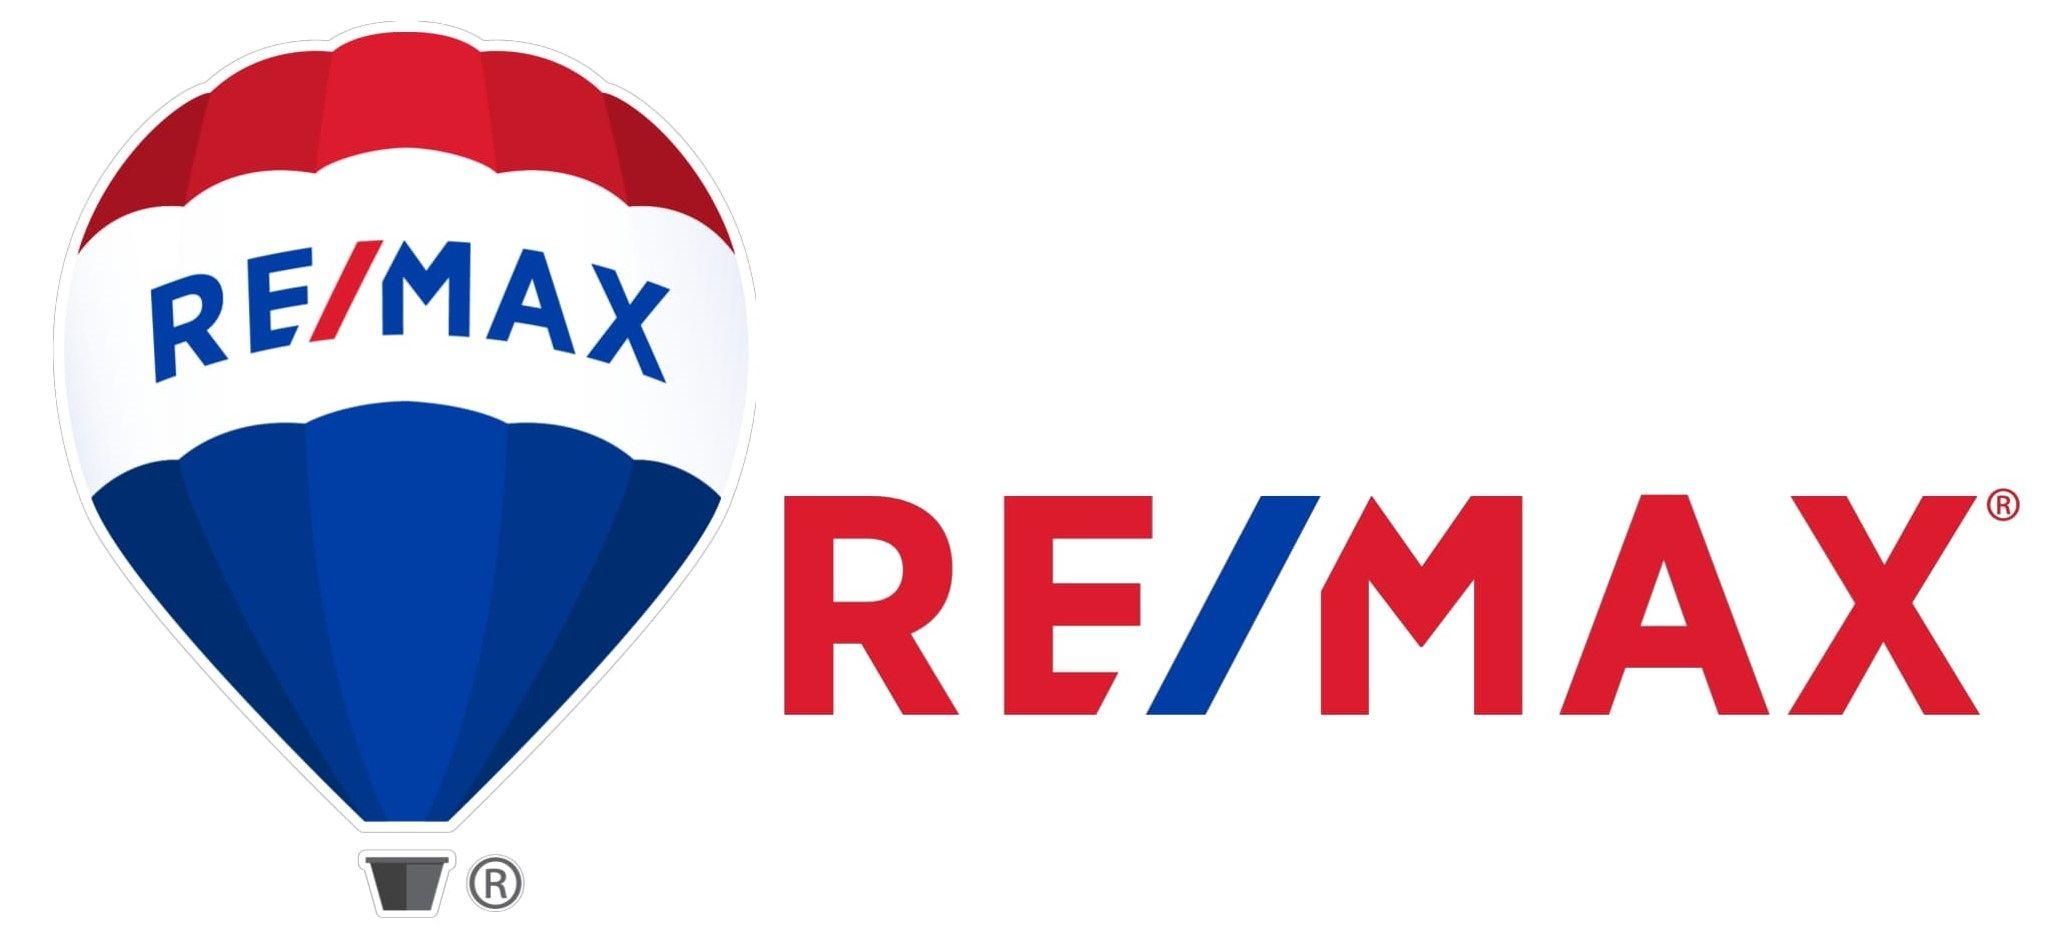 Remax.com Logo - Why RE MAX?